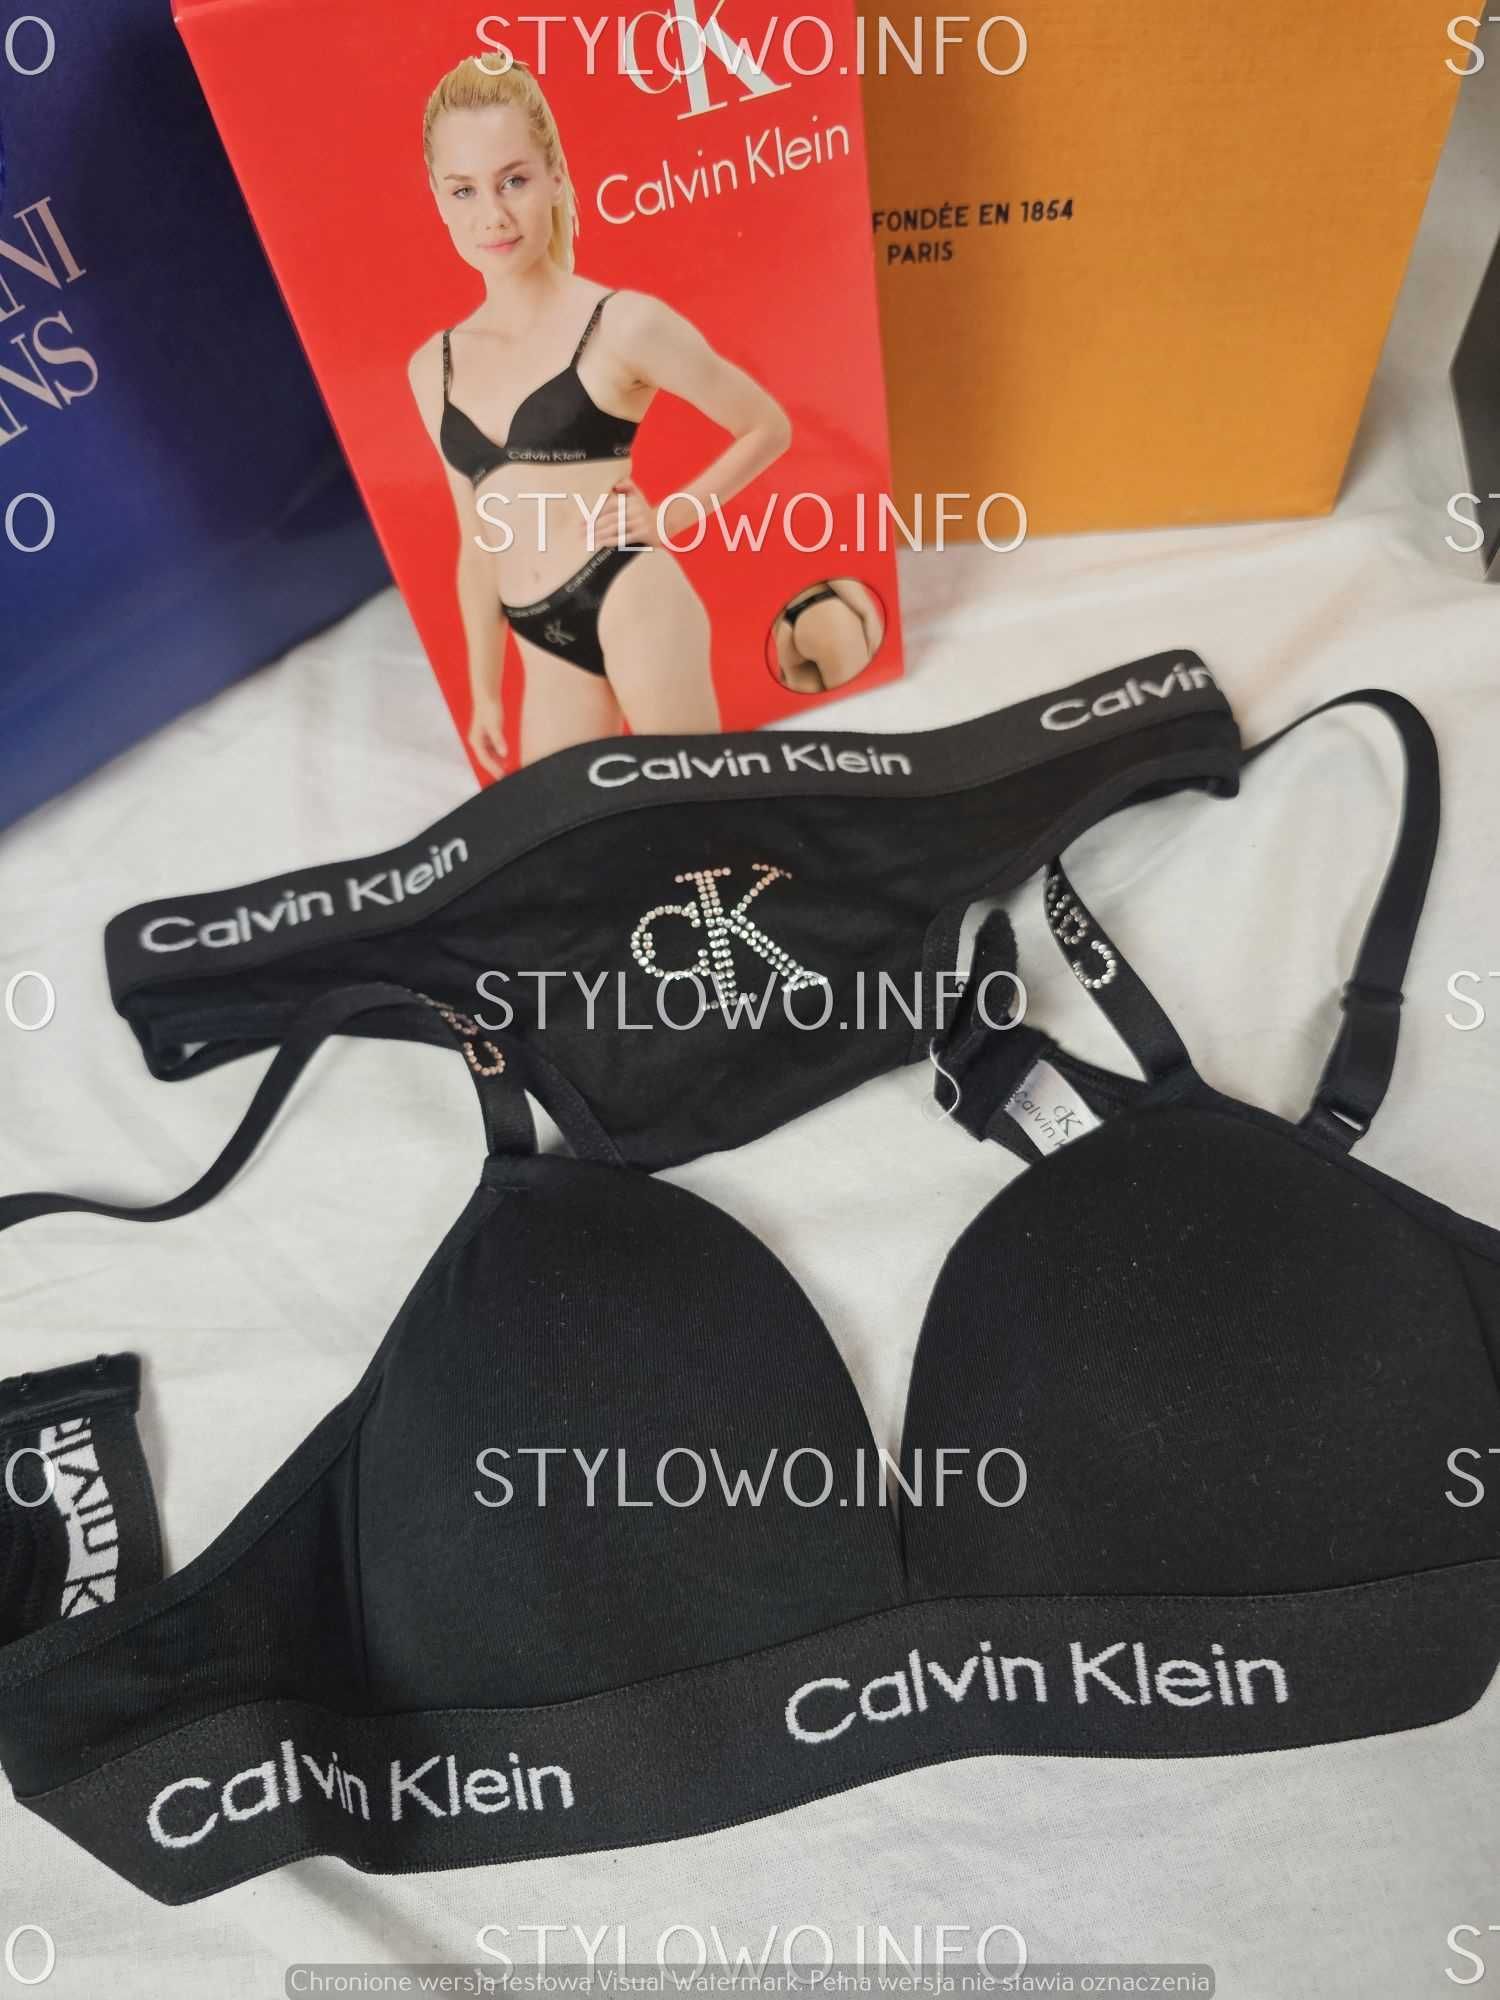 Top Stringi Bokserki 3pak Calvin Klein S-XL victoria secret Premium